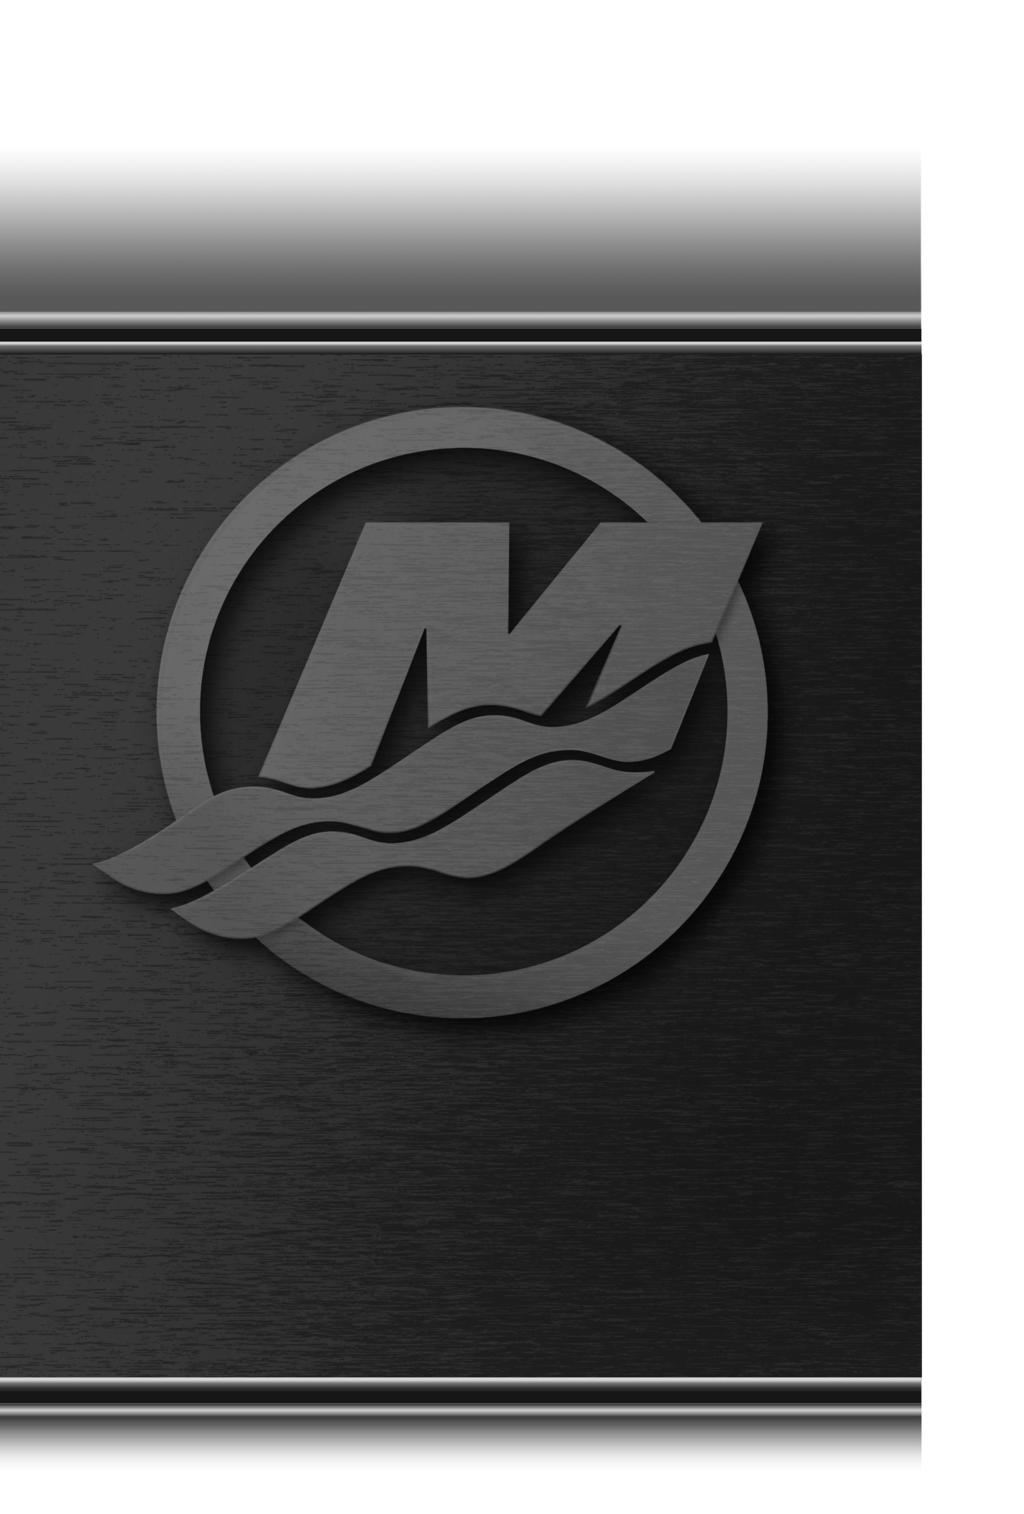 2016, Mercury Mrine 200-250 OptiMx compresi i modelli Pro XS